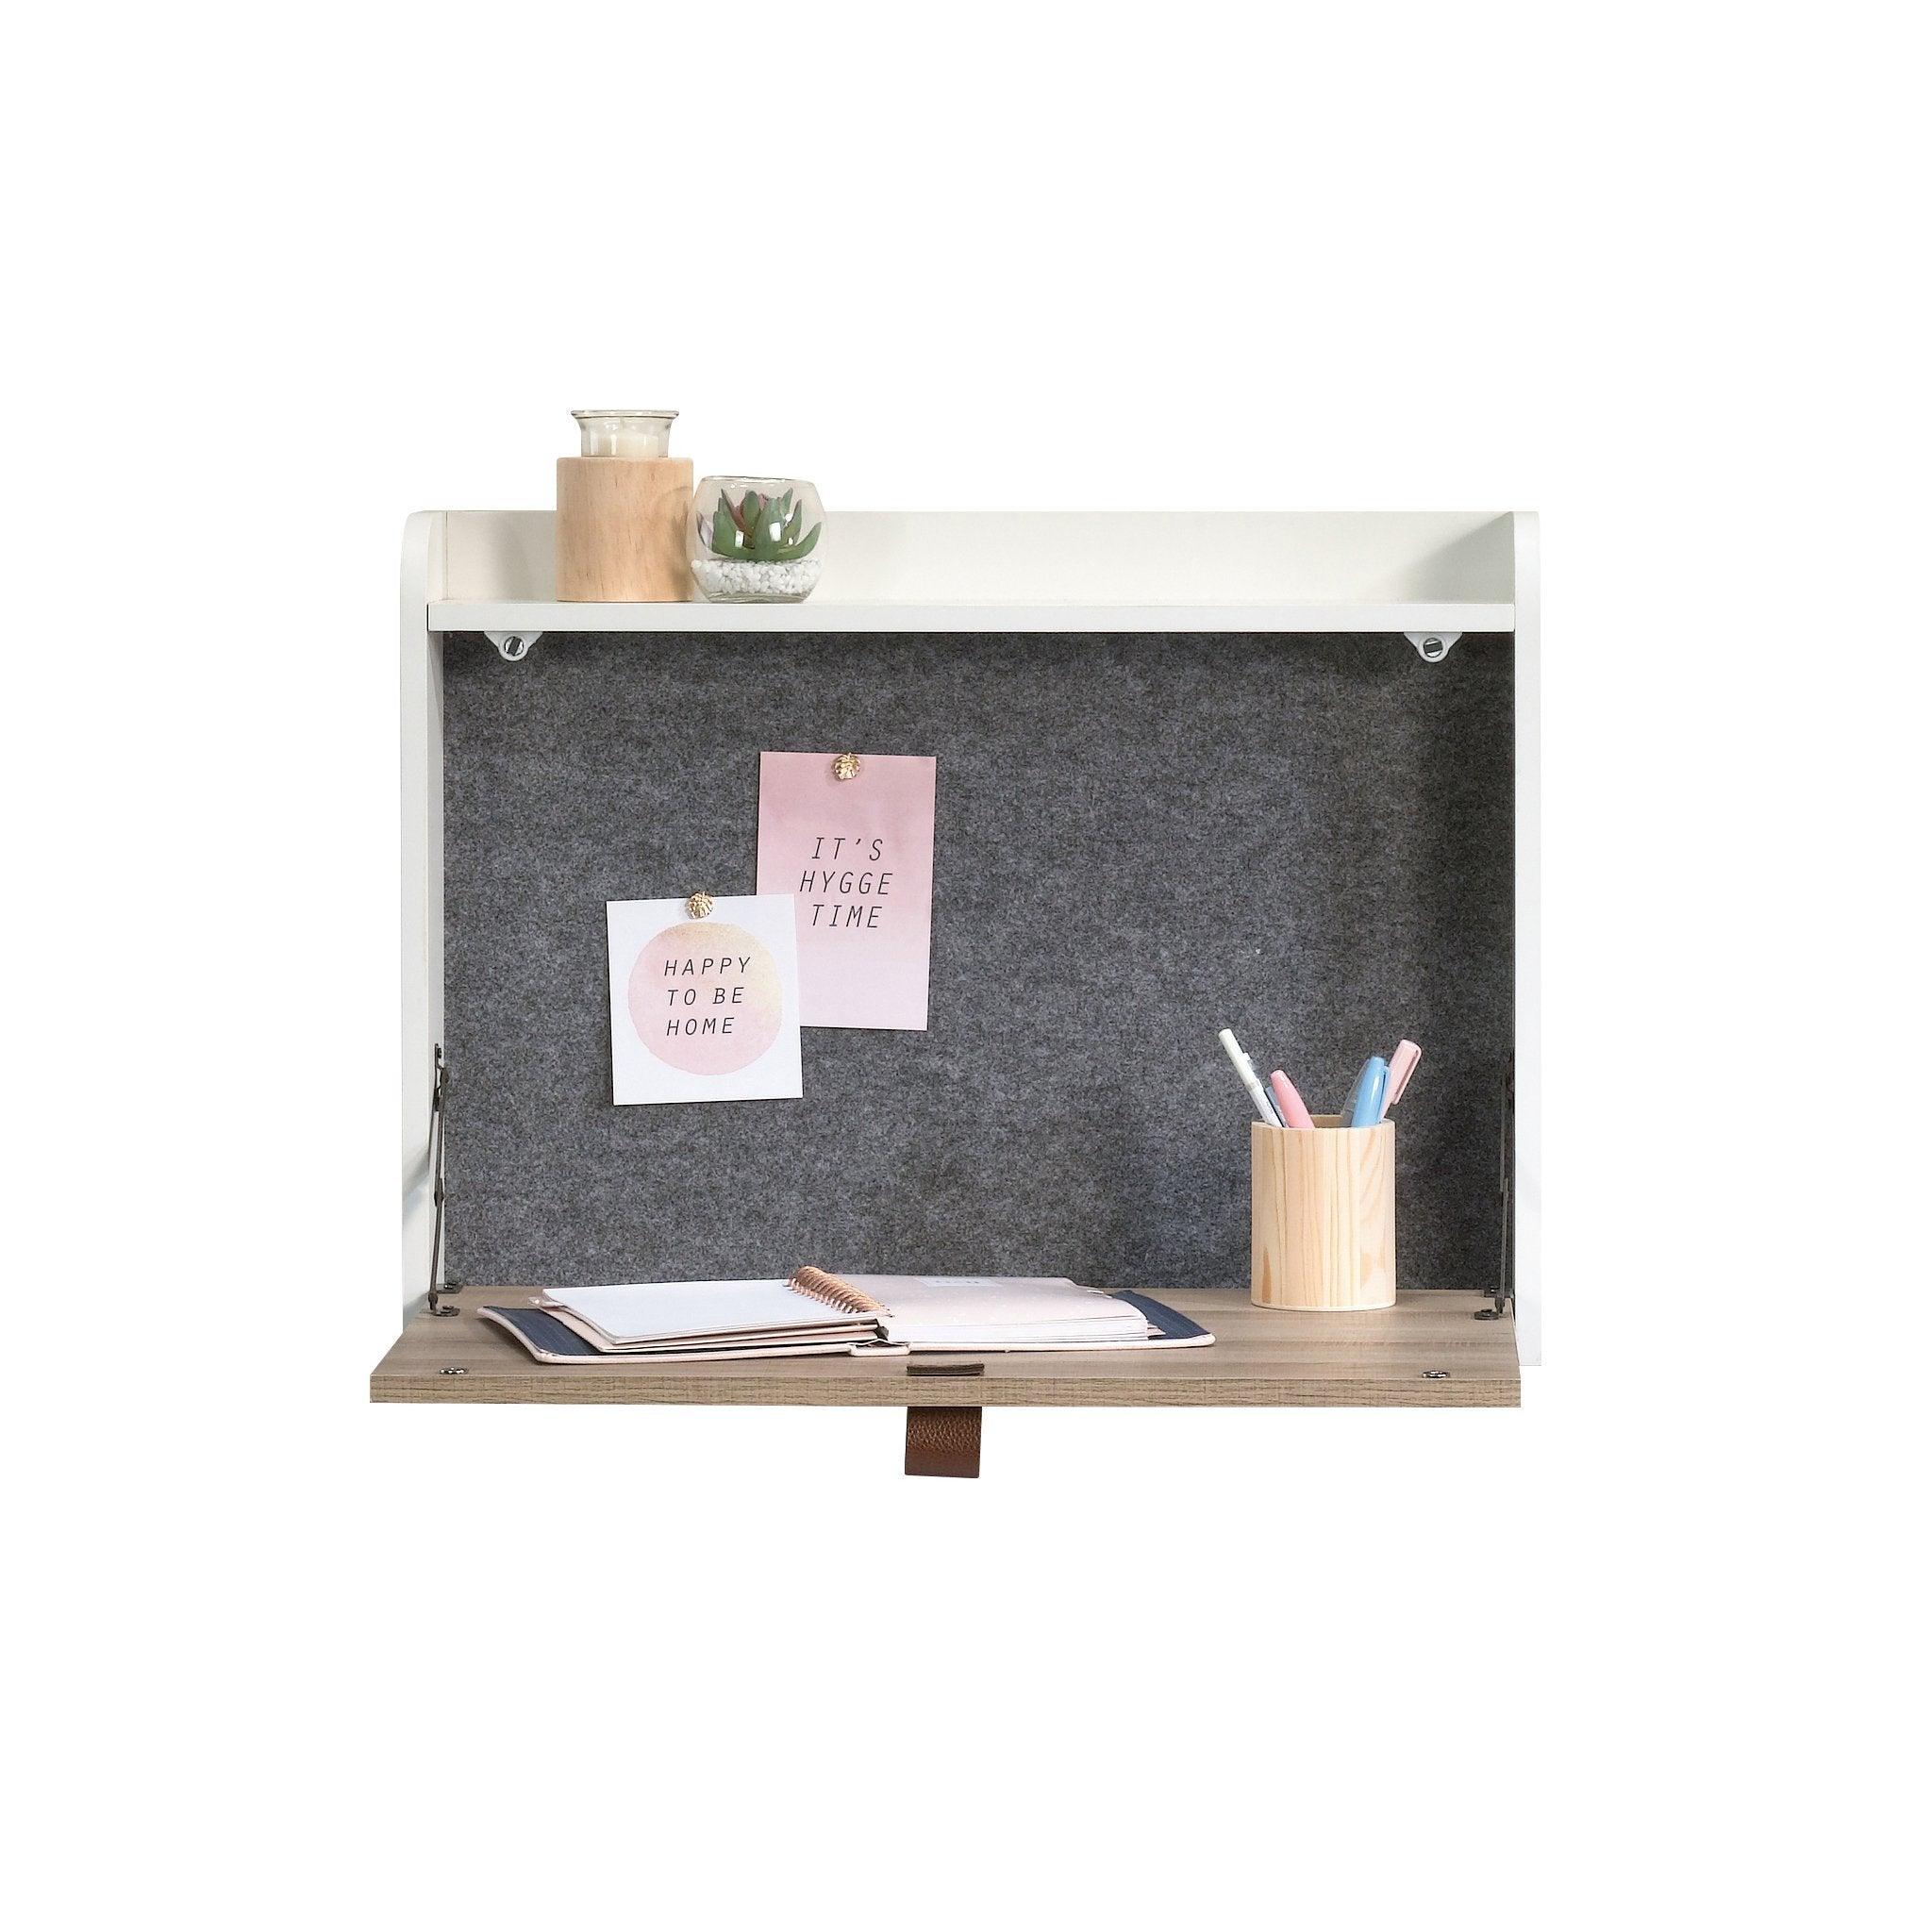 Avon leather handled foldaway wall desk - white - image 13